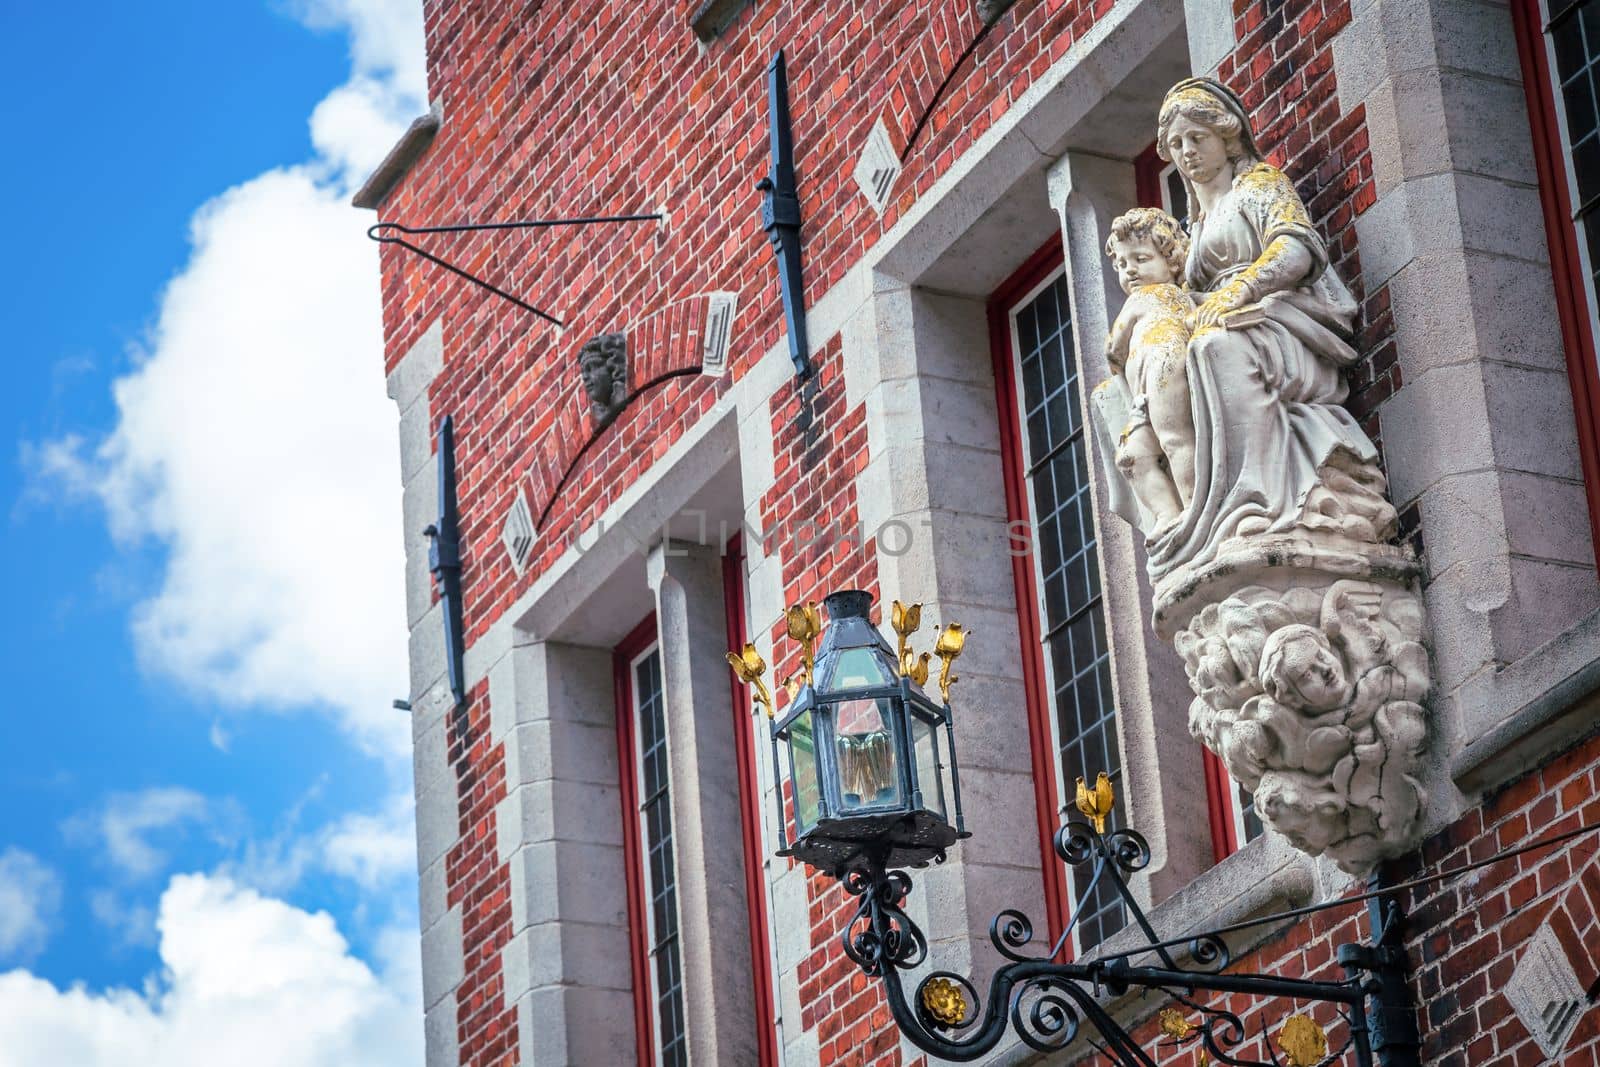 Flemish and ornate architecture of Bruges, Flanders, Belgium by positivetravelart